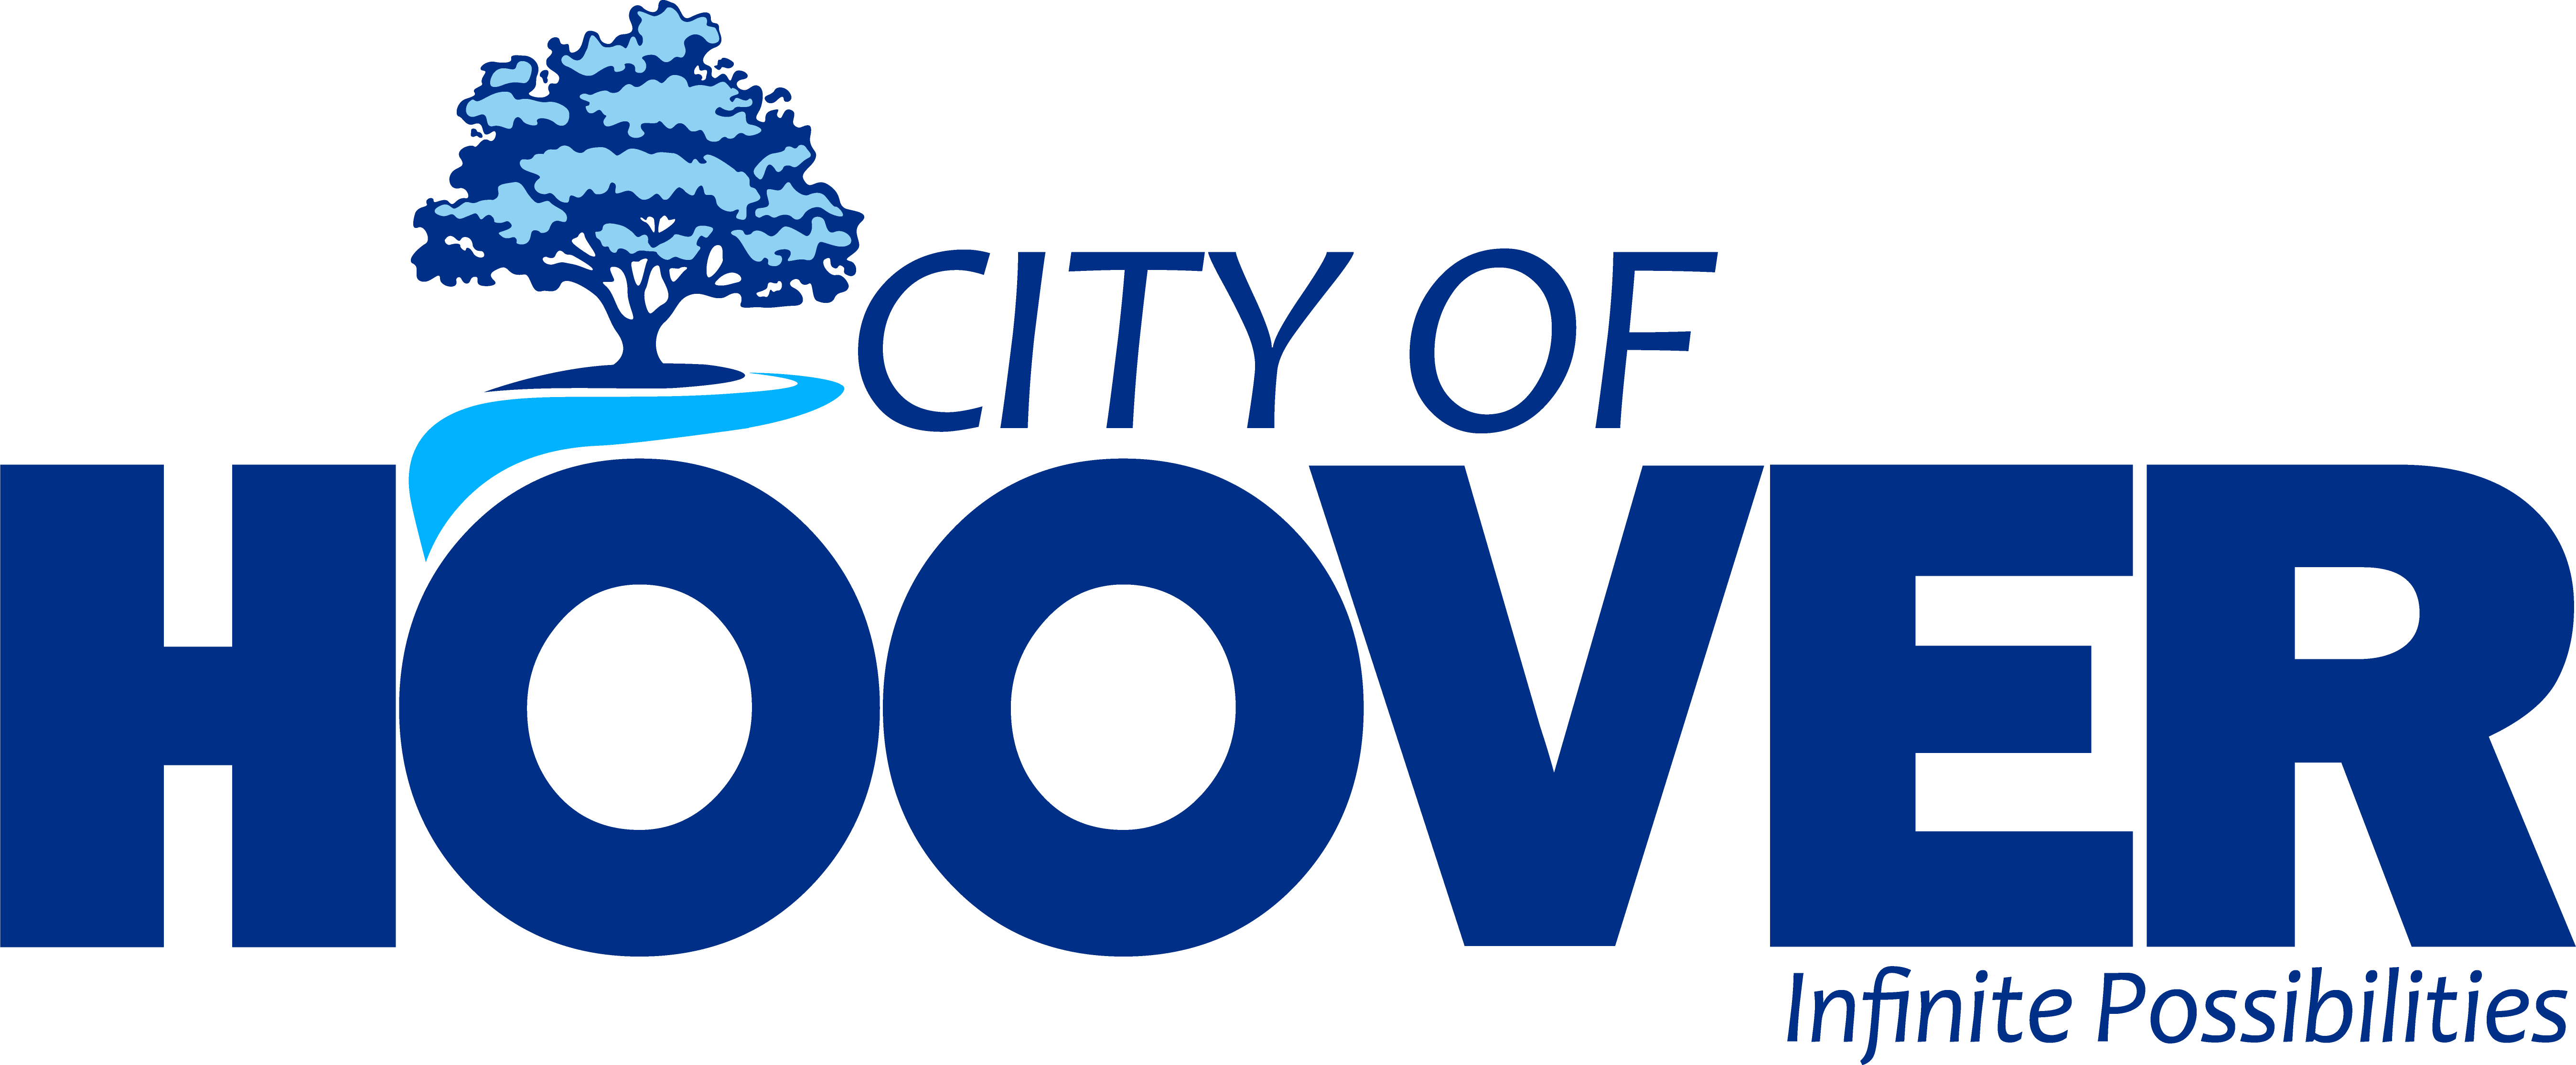 City of hoover logo tree cahaba official 2022